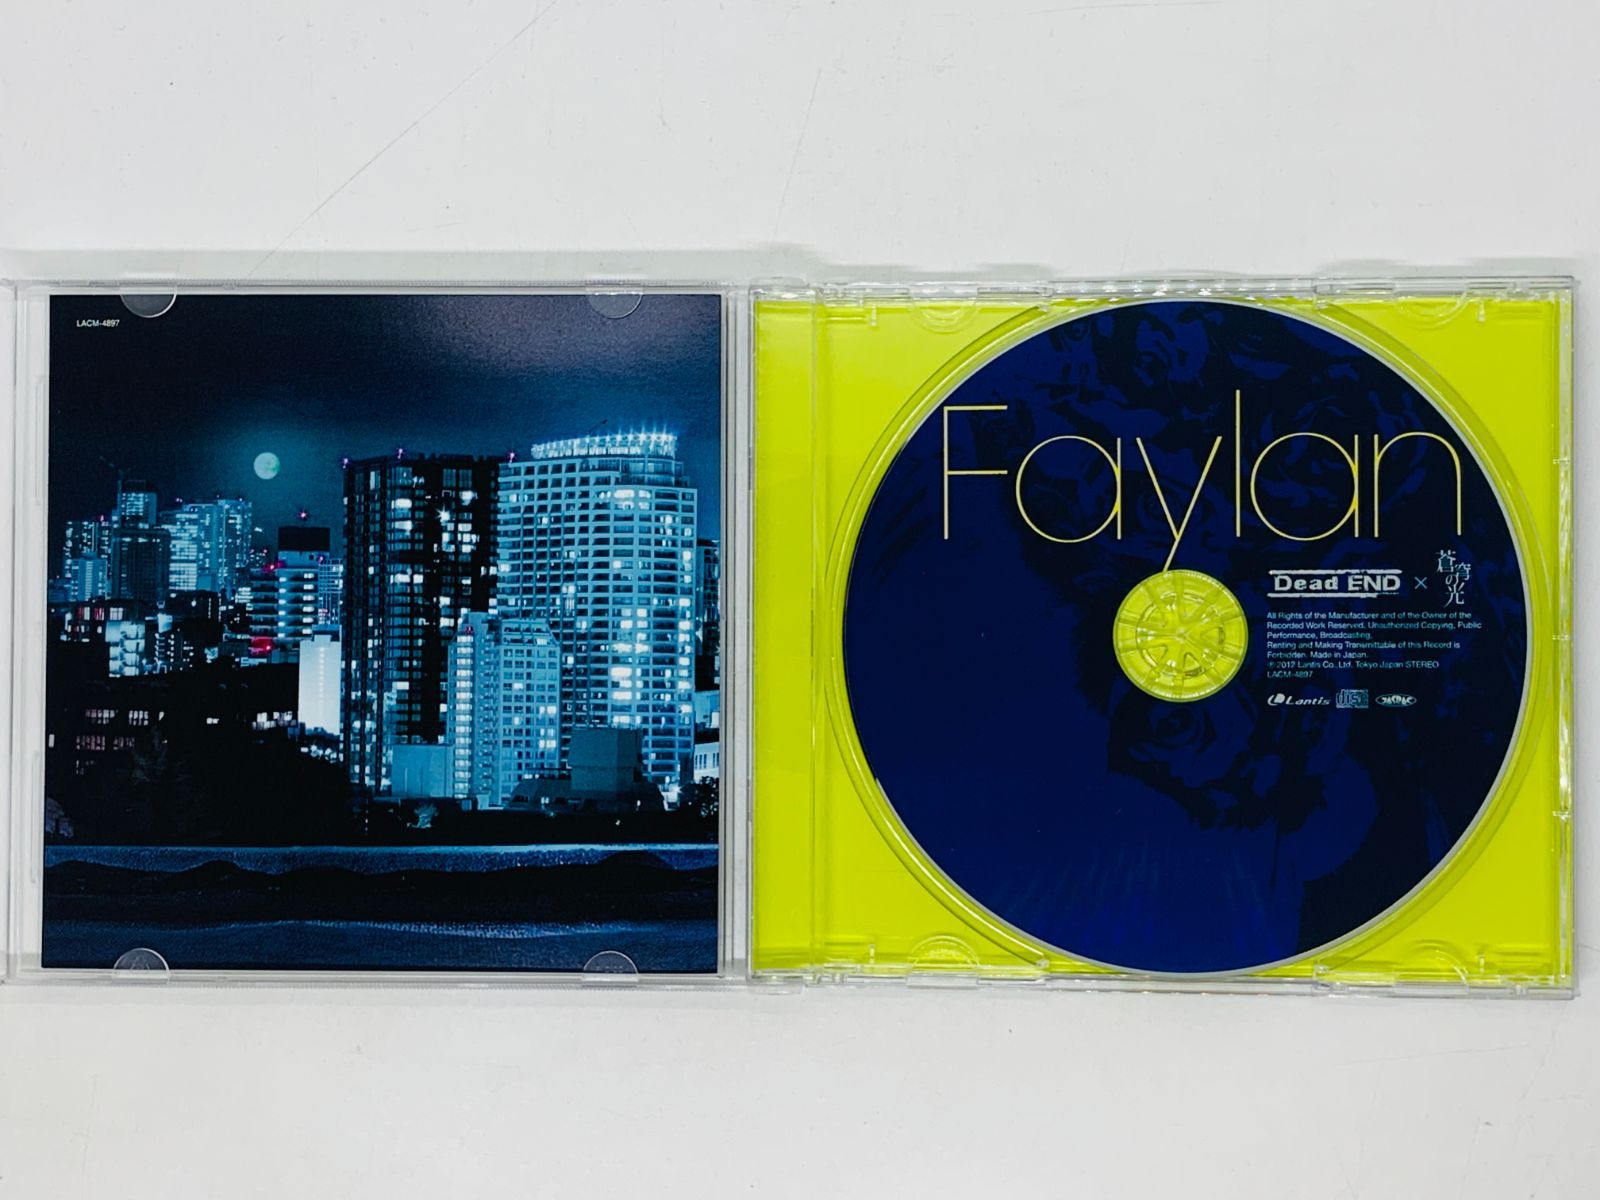 CD 飛蘭 Dead END 蒼穹の光 / フェイラン Faylan 帯付き 通常盤 G02 